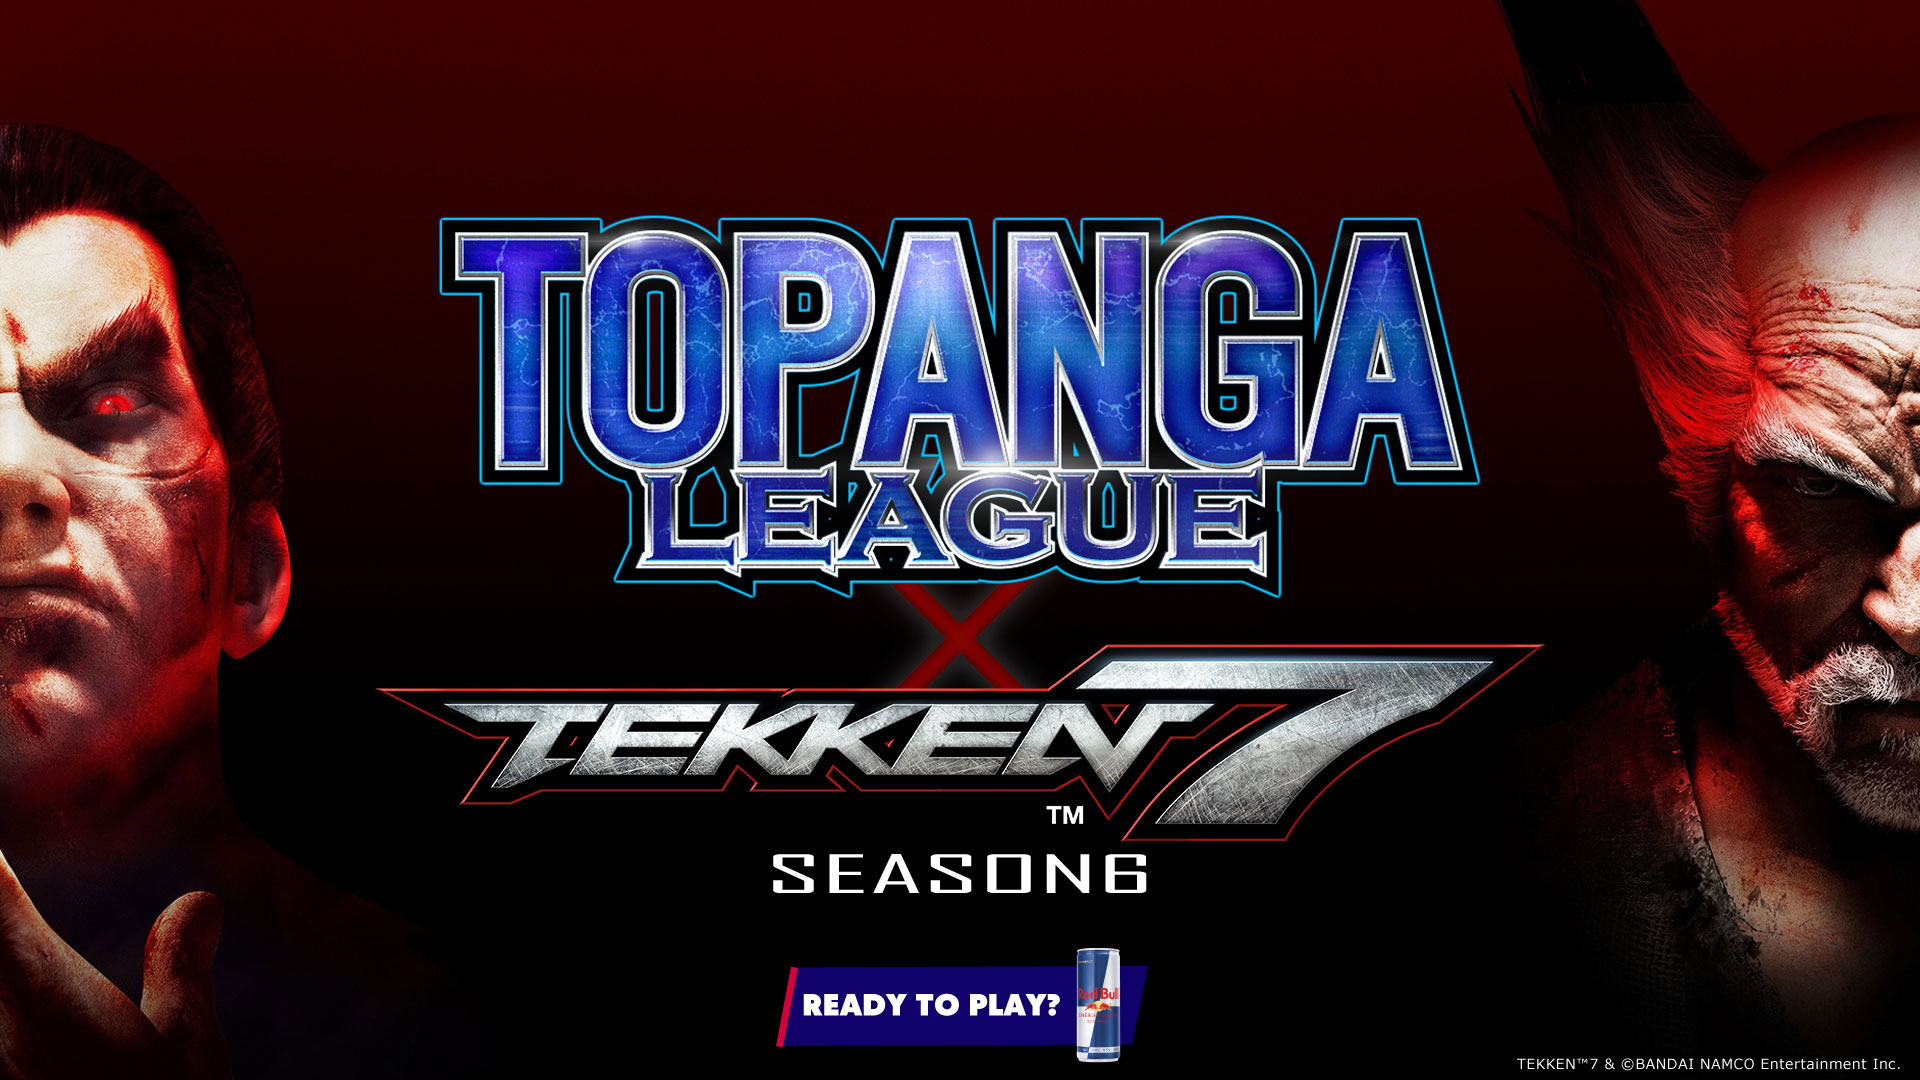 TOPANGA LEAGUE x TEKKEN7 Season6